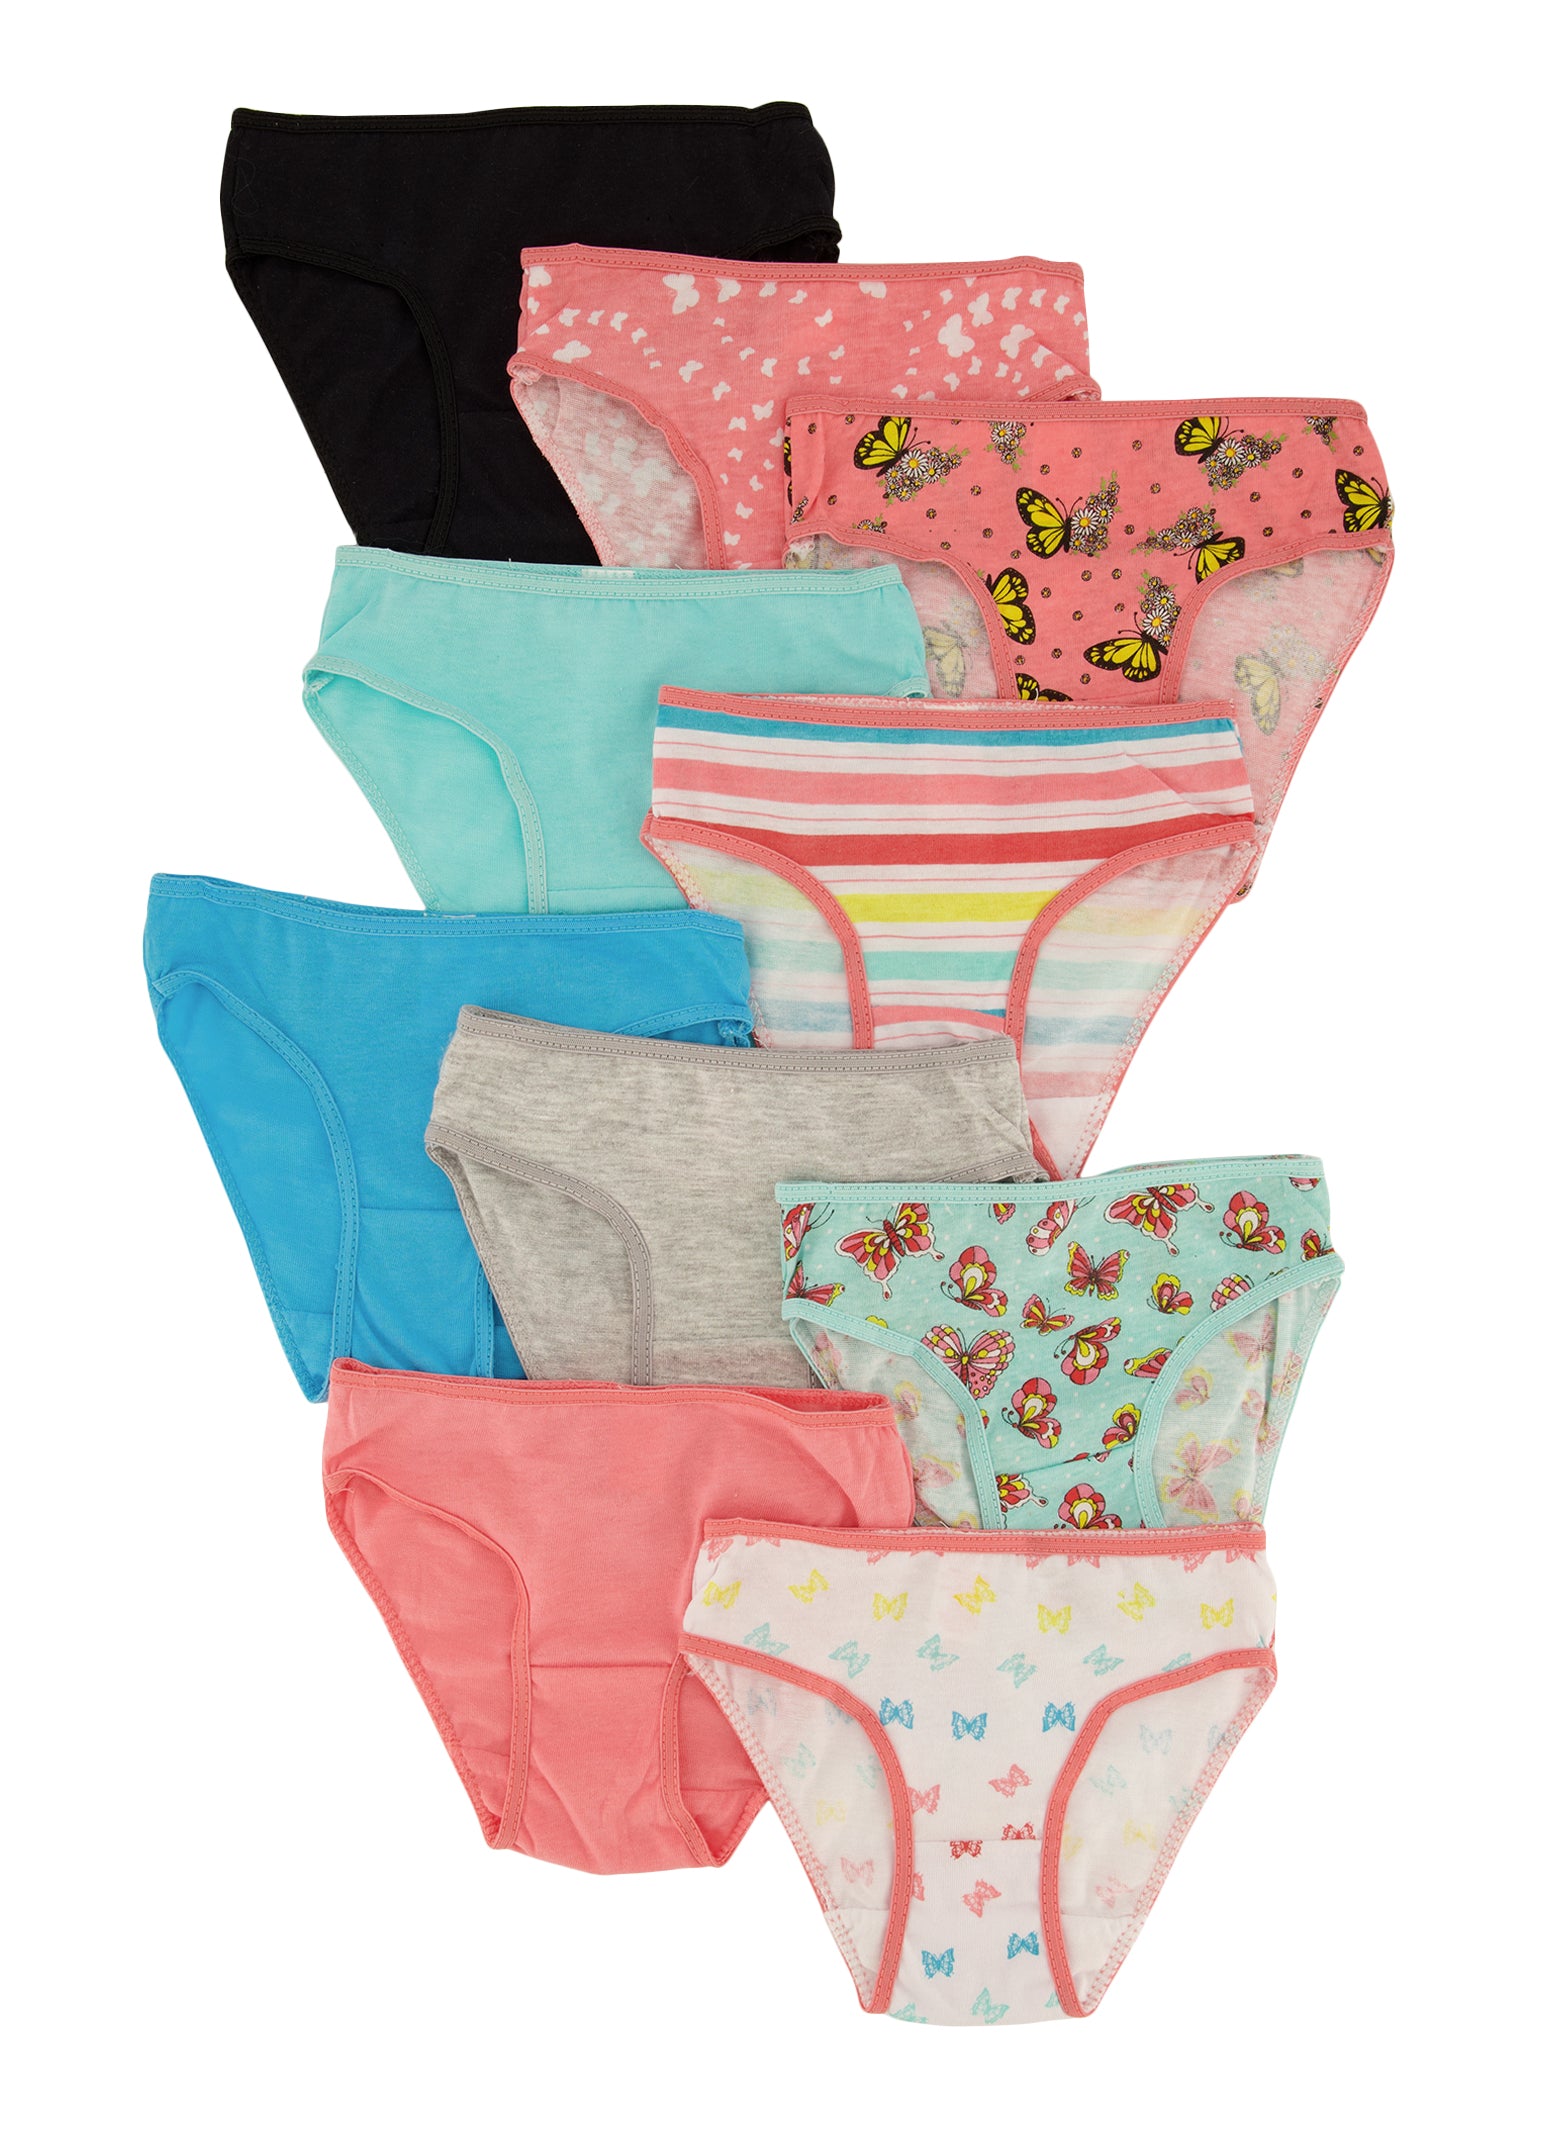 10-PACK Hanes Panties Girls Sz 16 Assorted Underwear 100